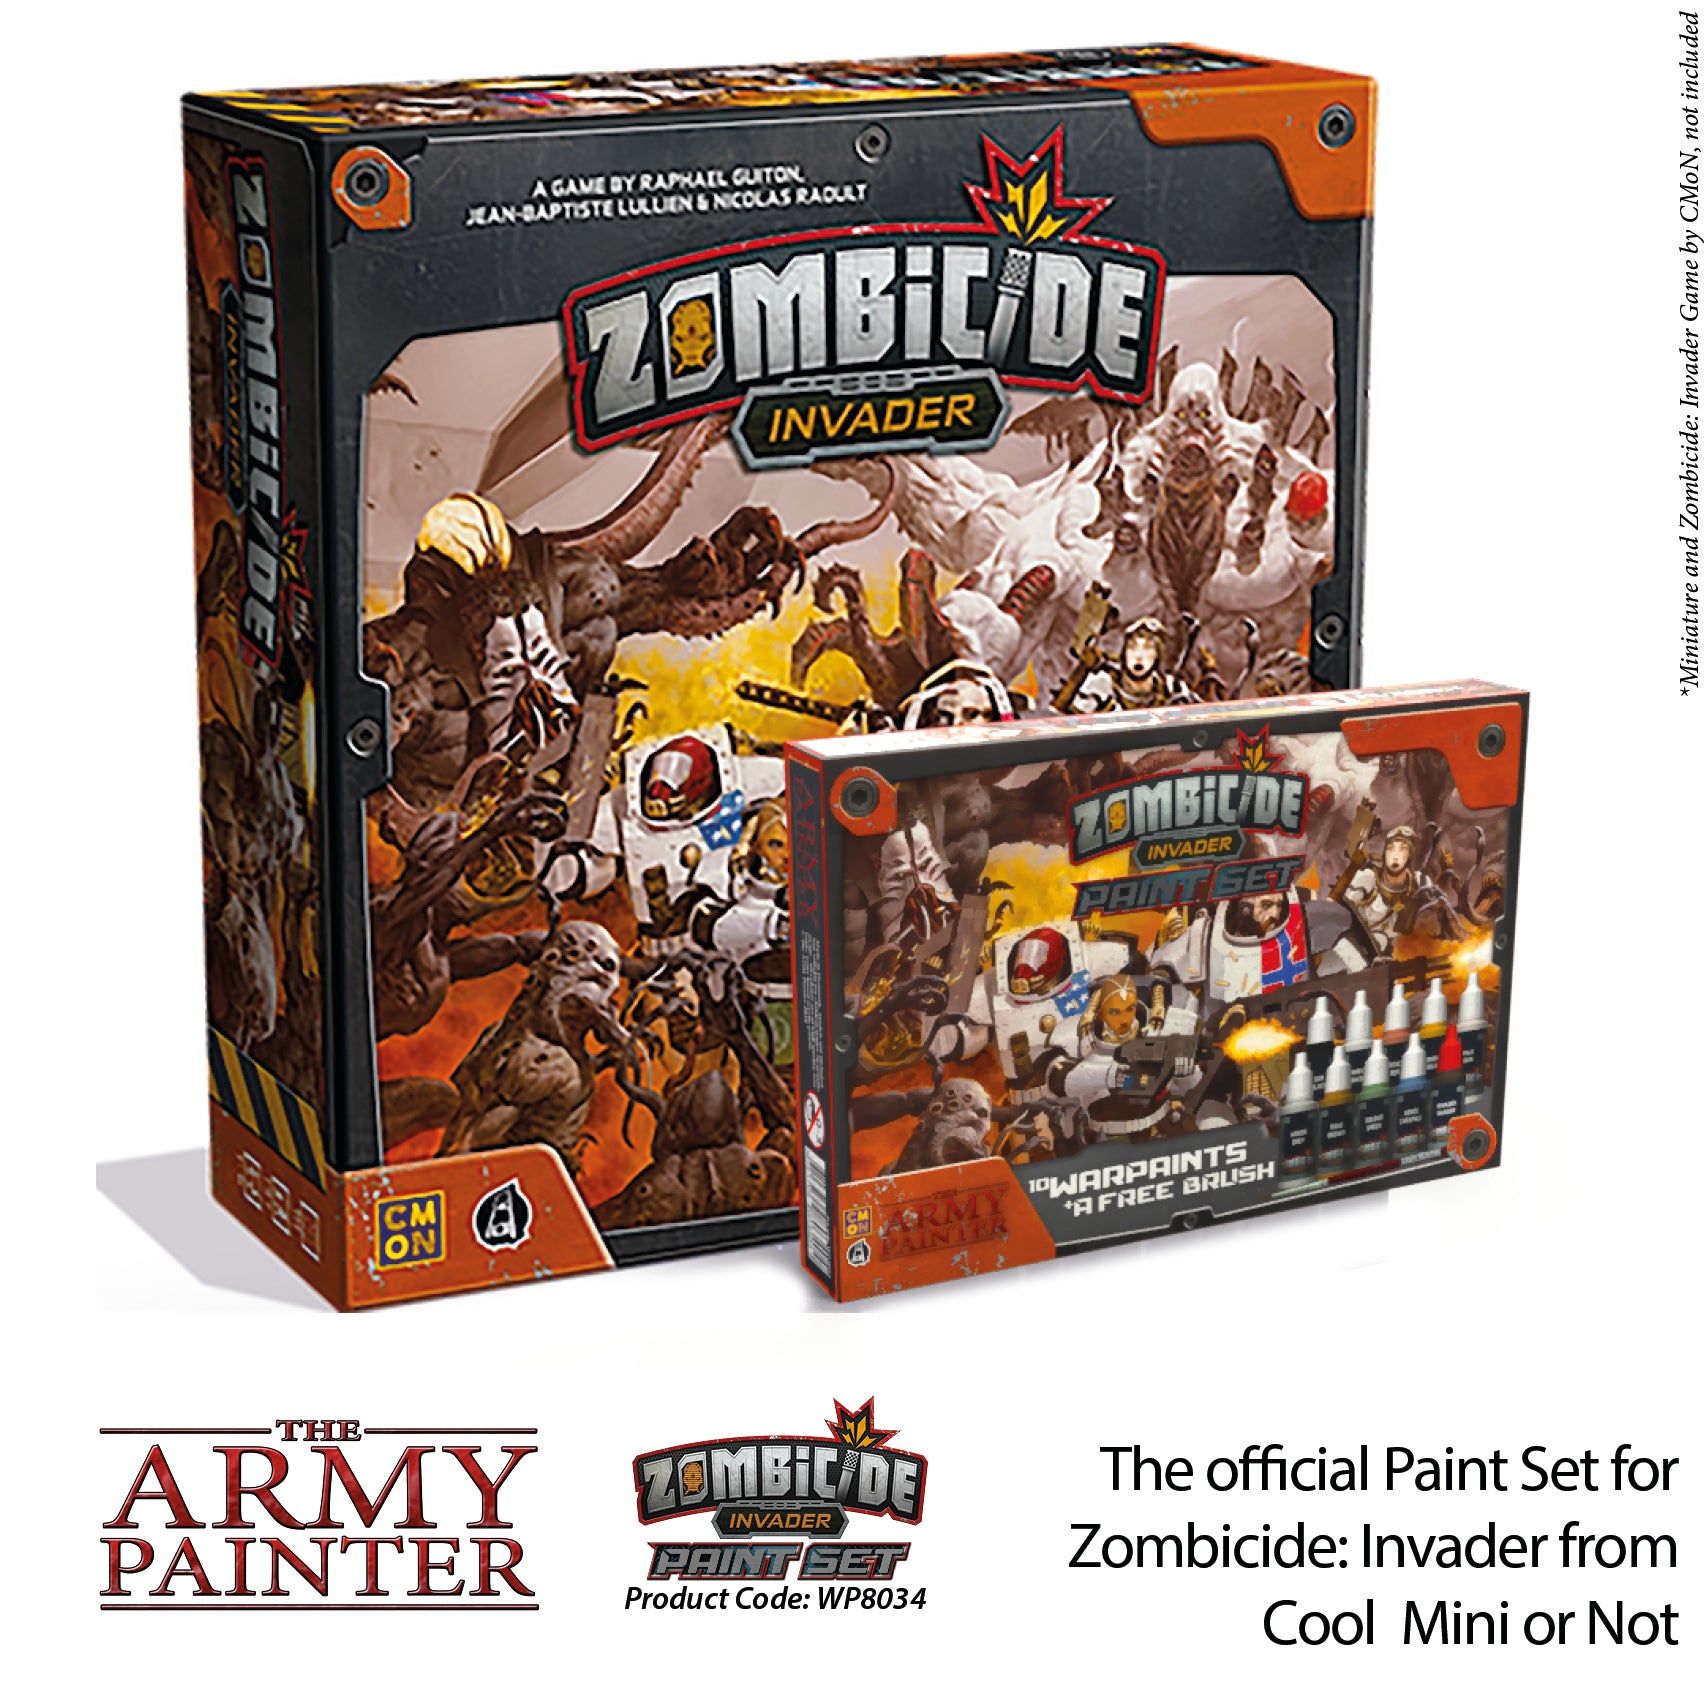 Zombicide Invader Paint Set